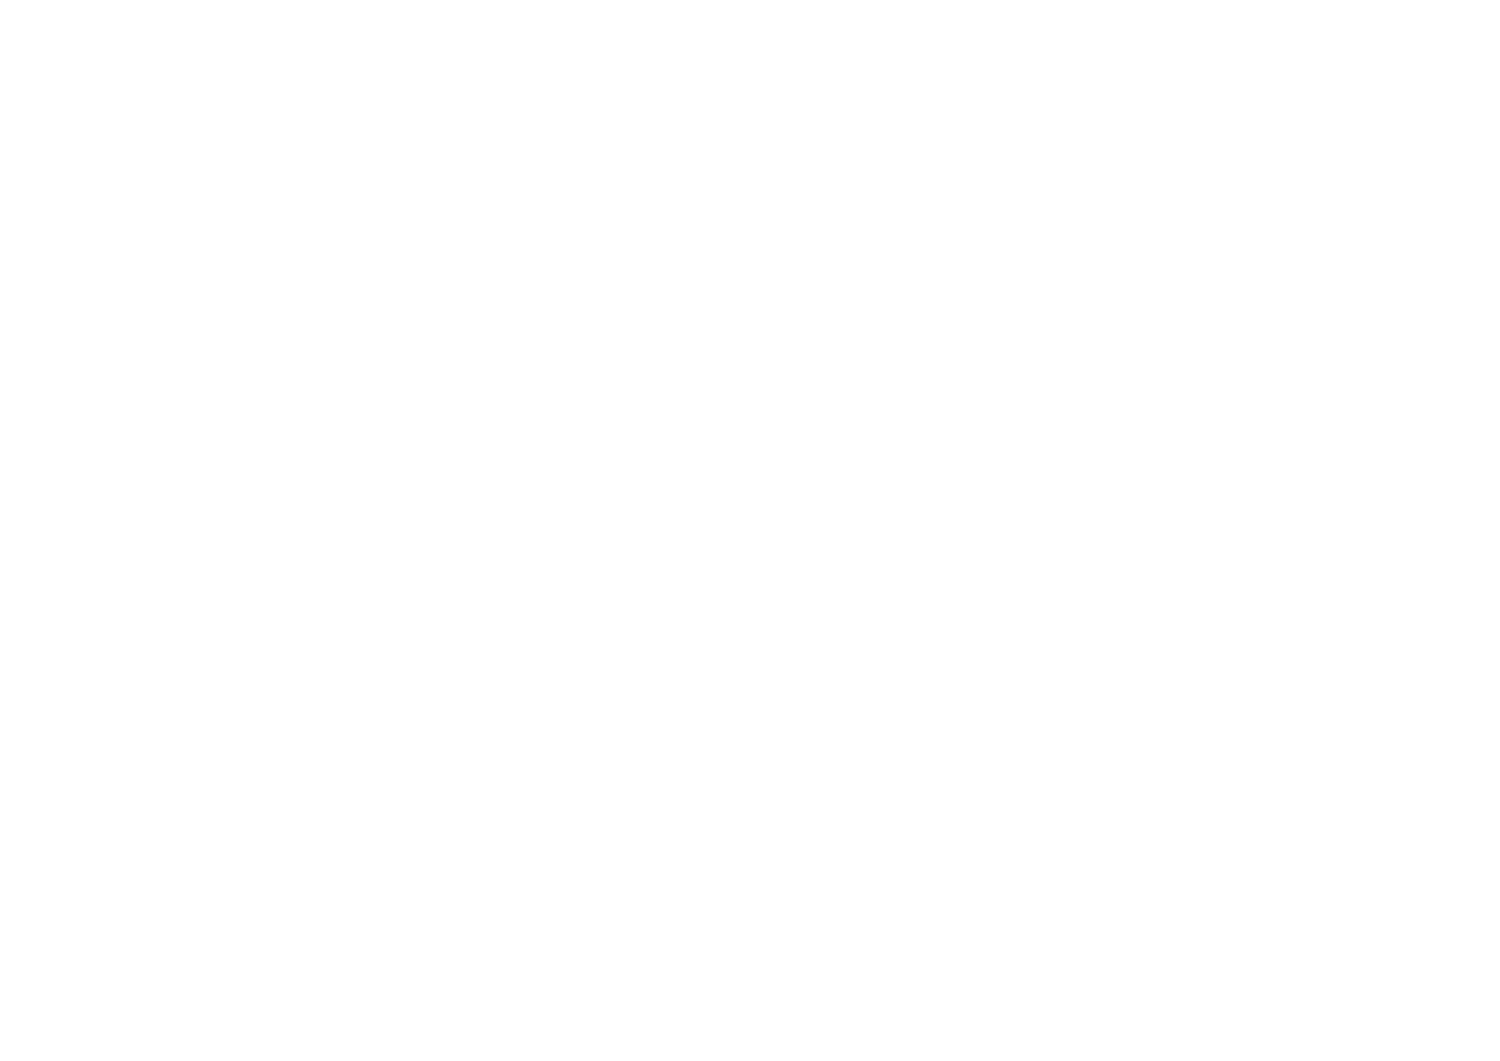 Bluvec Technologies